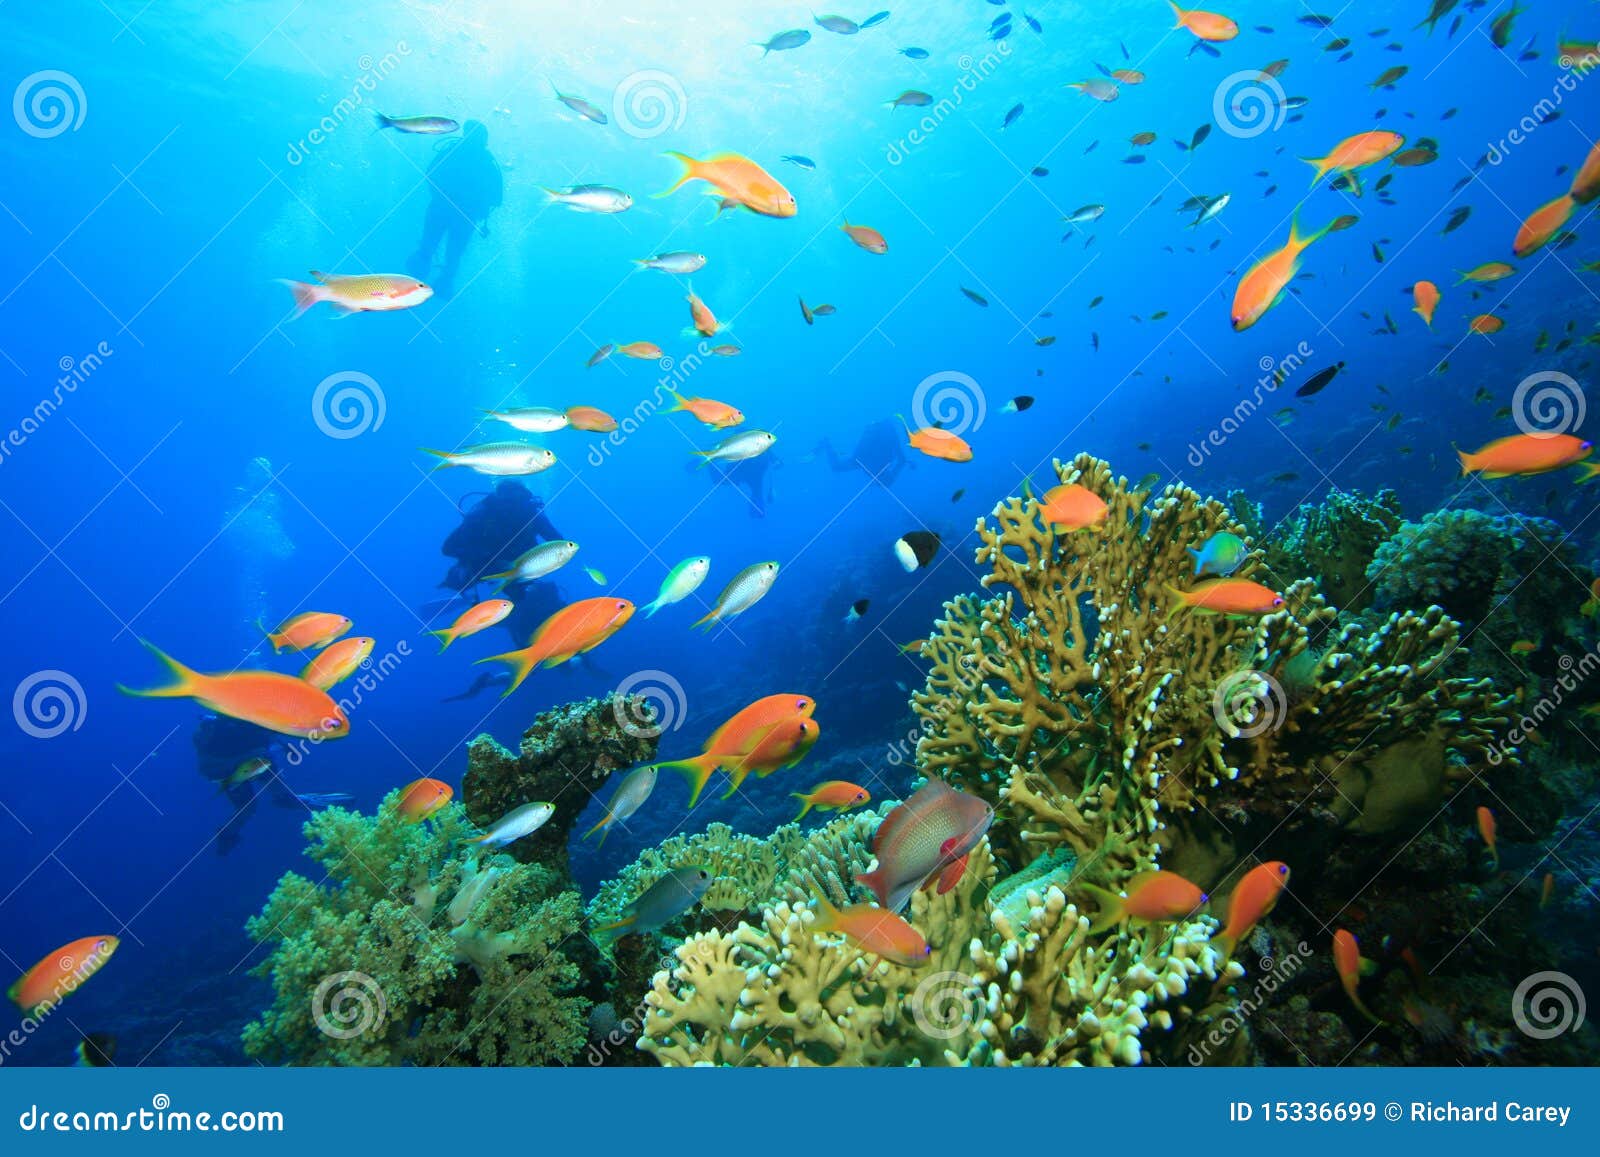 Scuba Divers Explores Coral Reef Stock Image - Image of wildlife ...